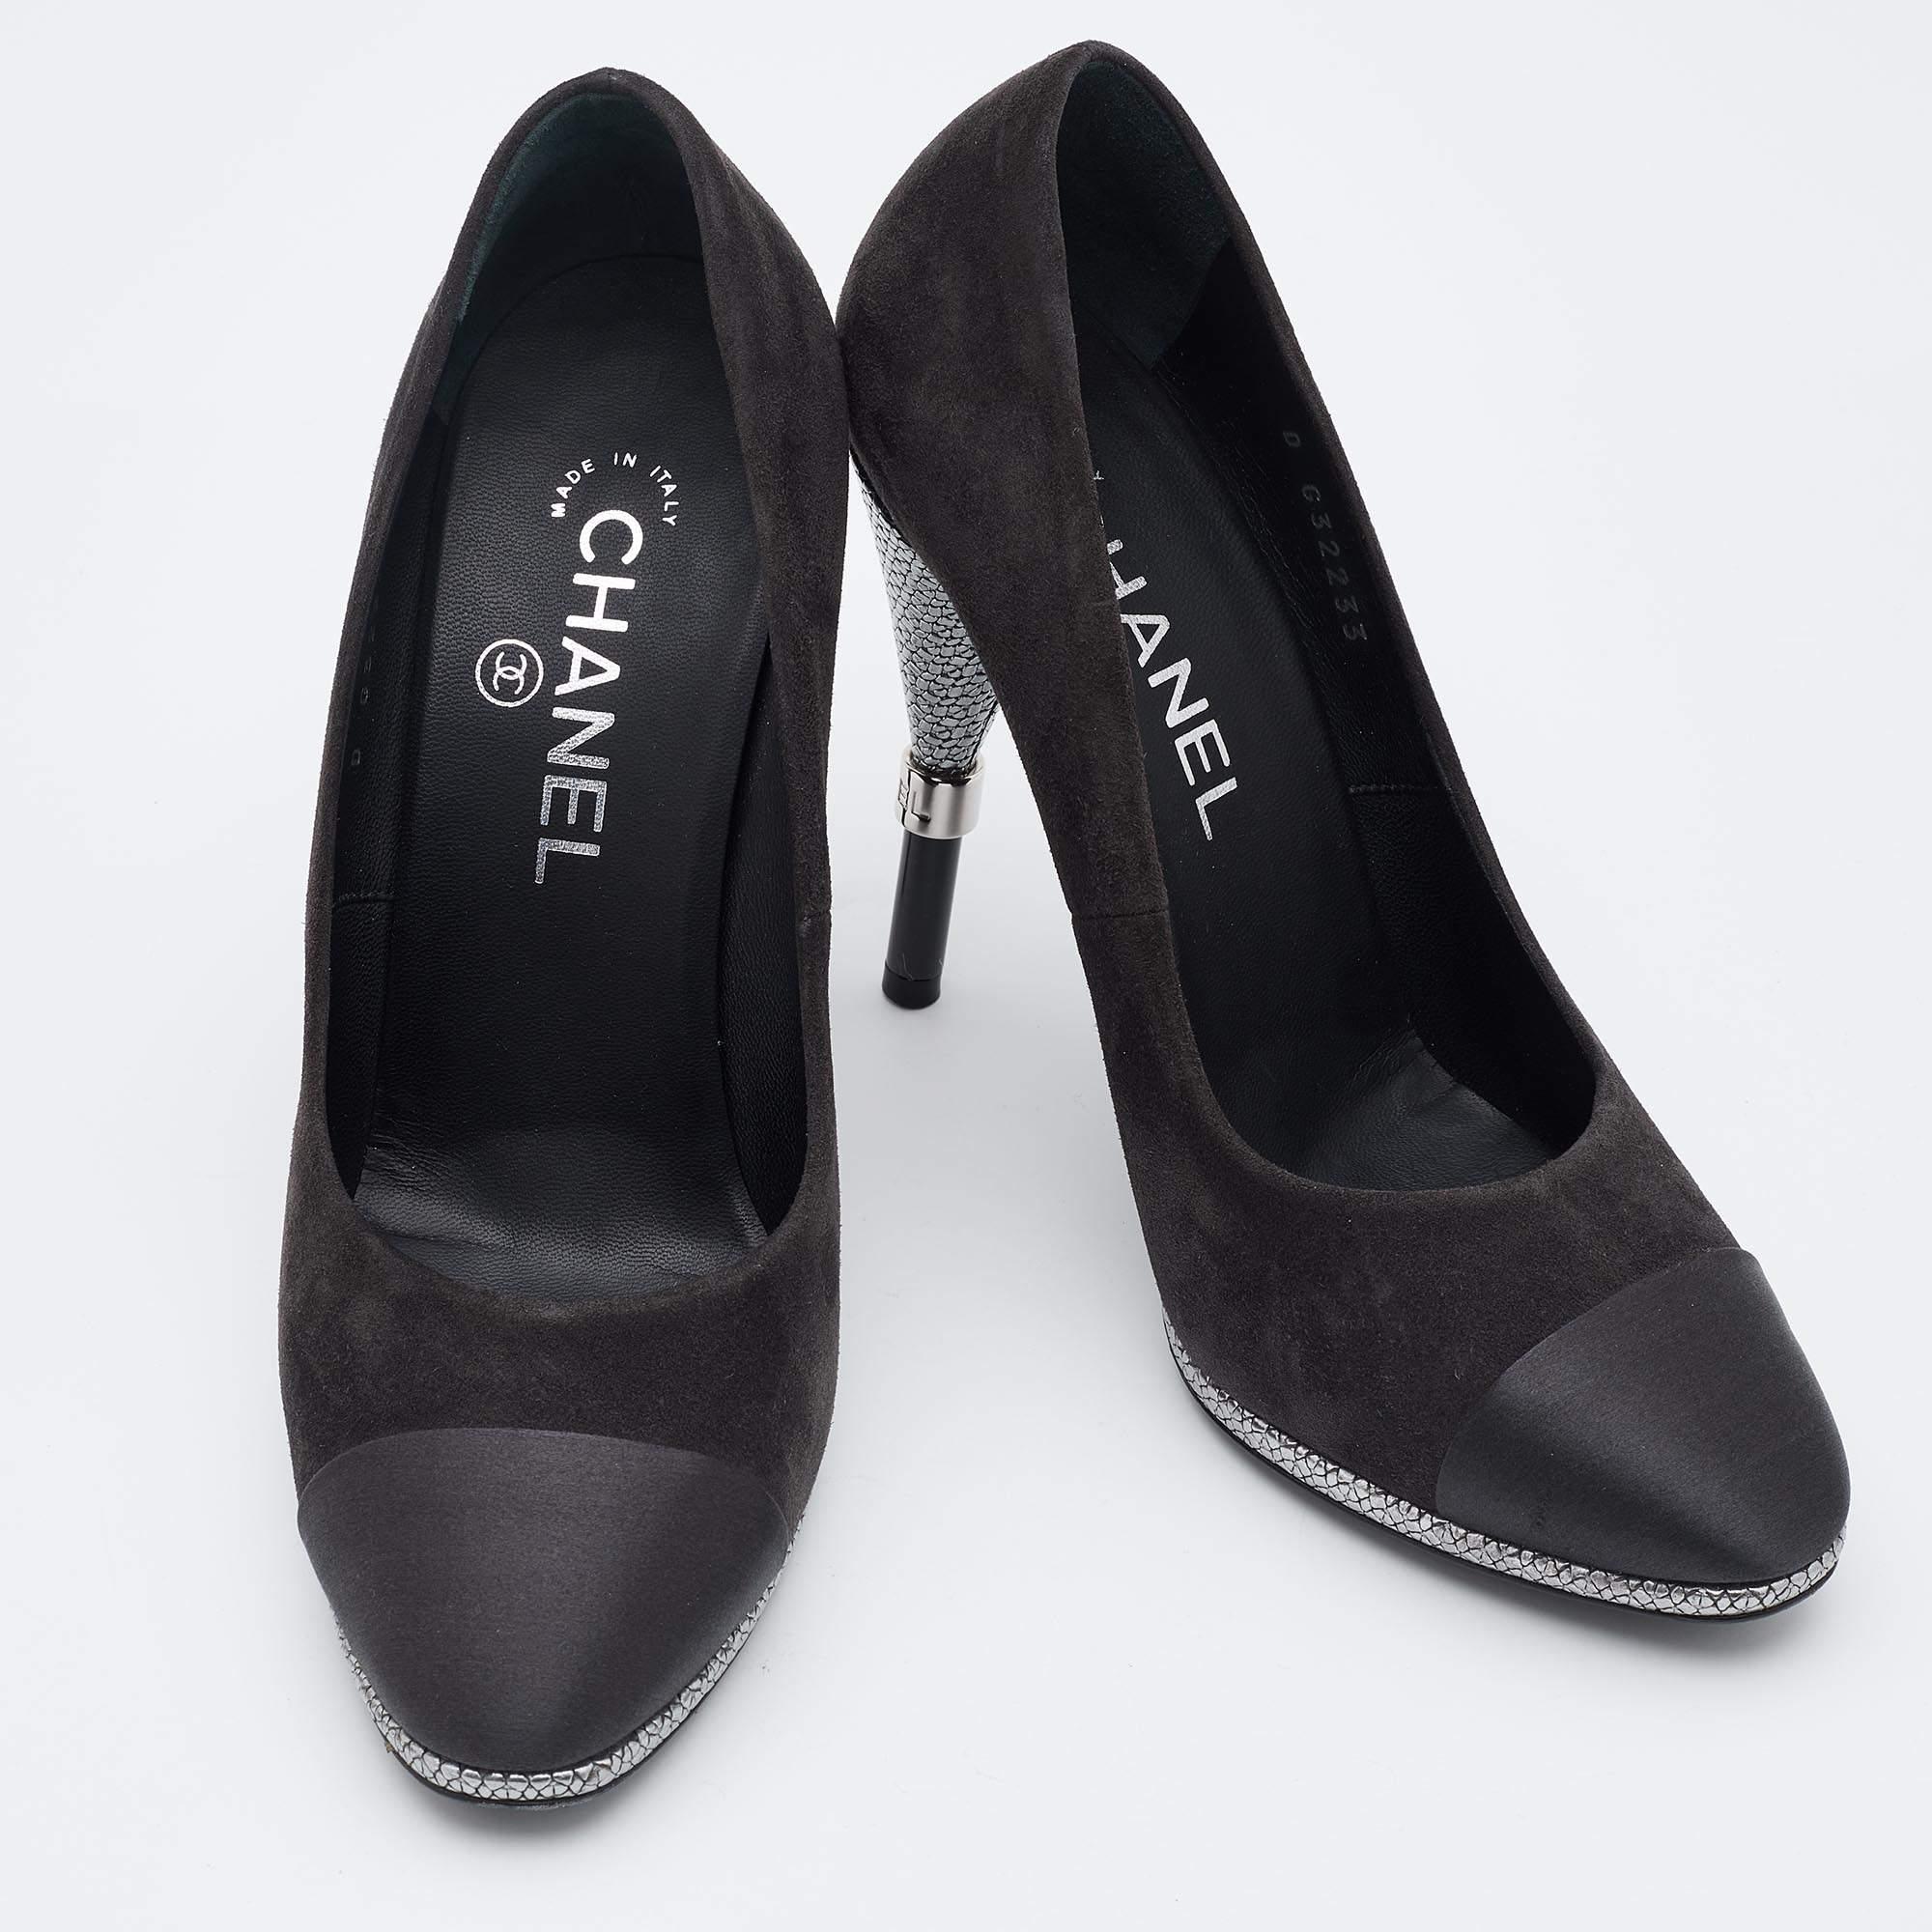 Chanel Black Suede and Satin Cap Toe CC Pumps Size 37.5 1